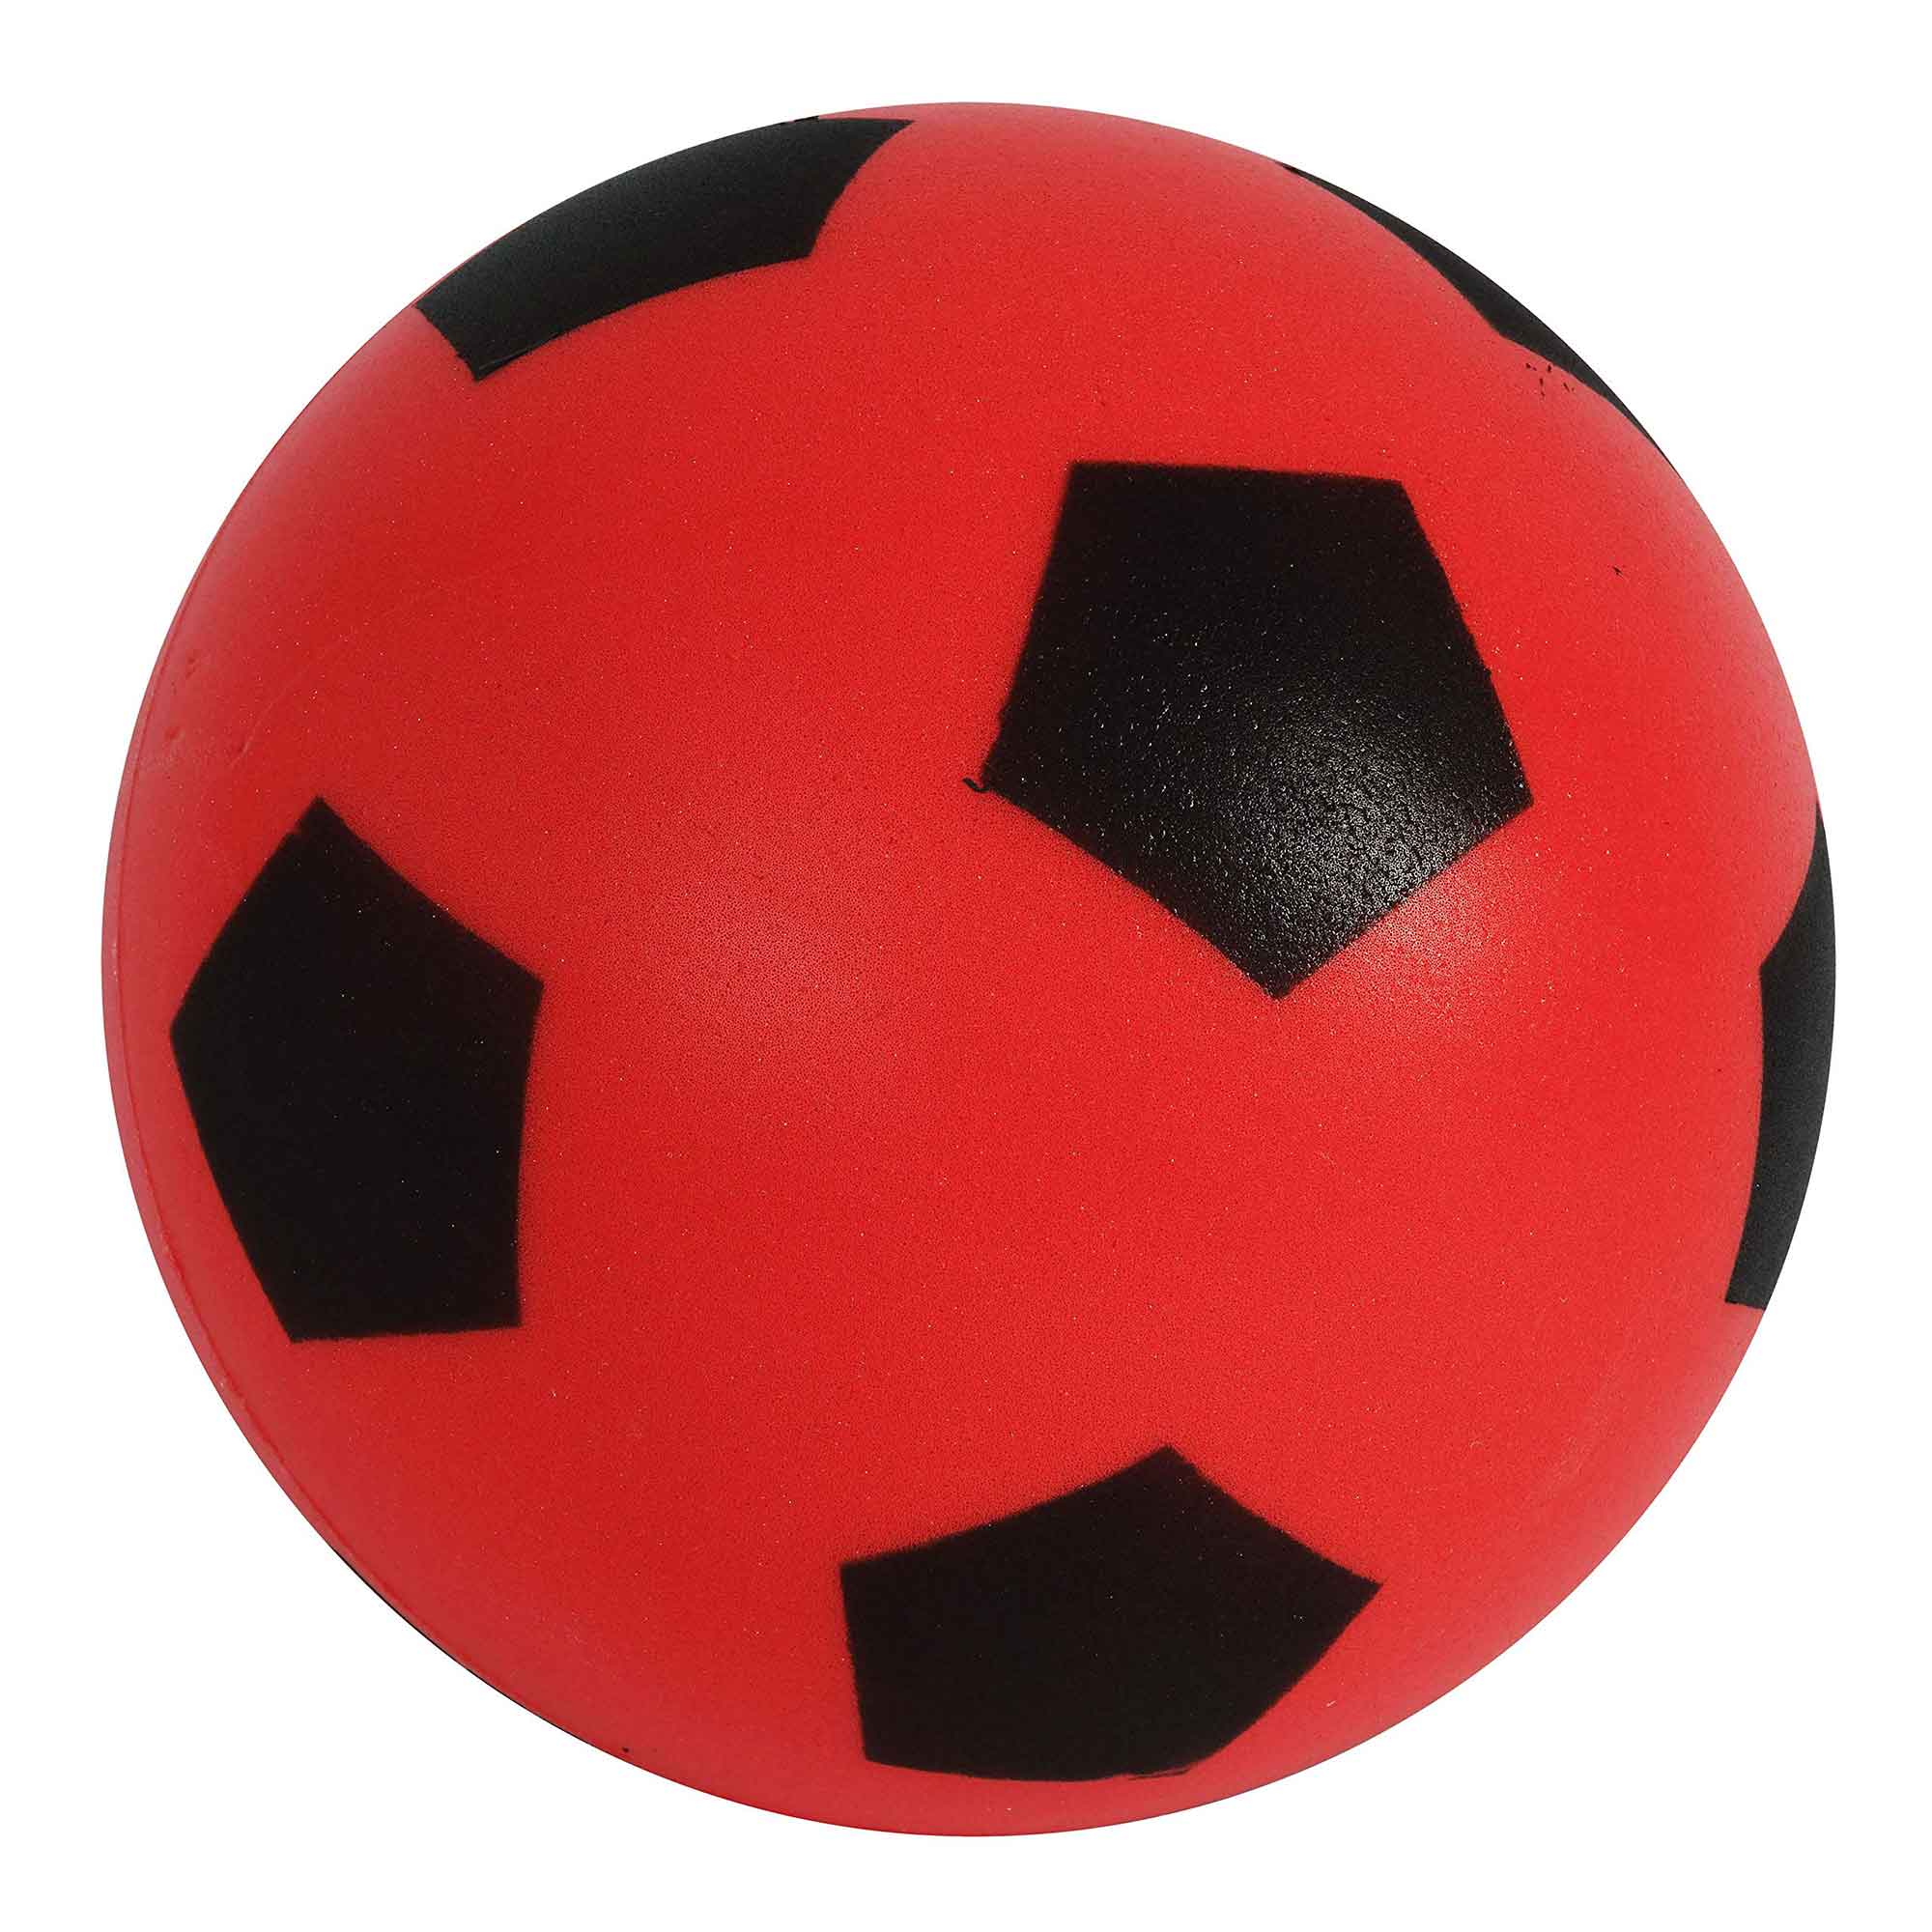 Copy of Soft Foam/Sponge Footballs/Soccer Balls - Red